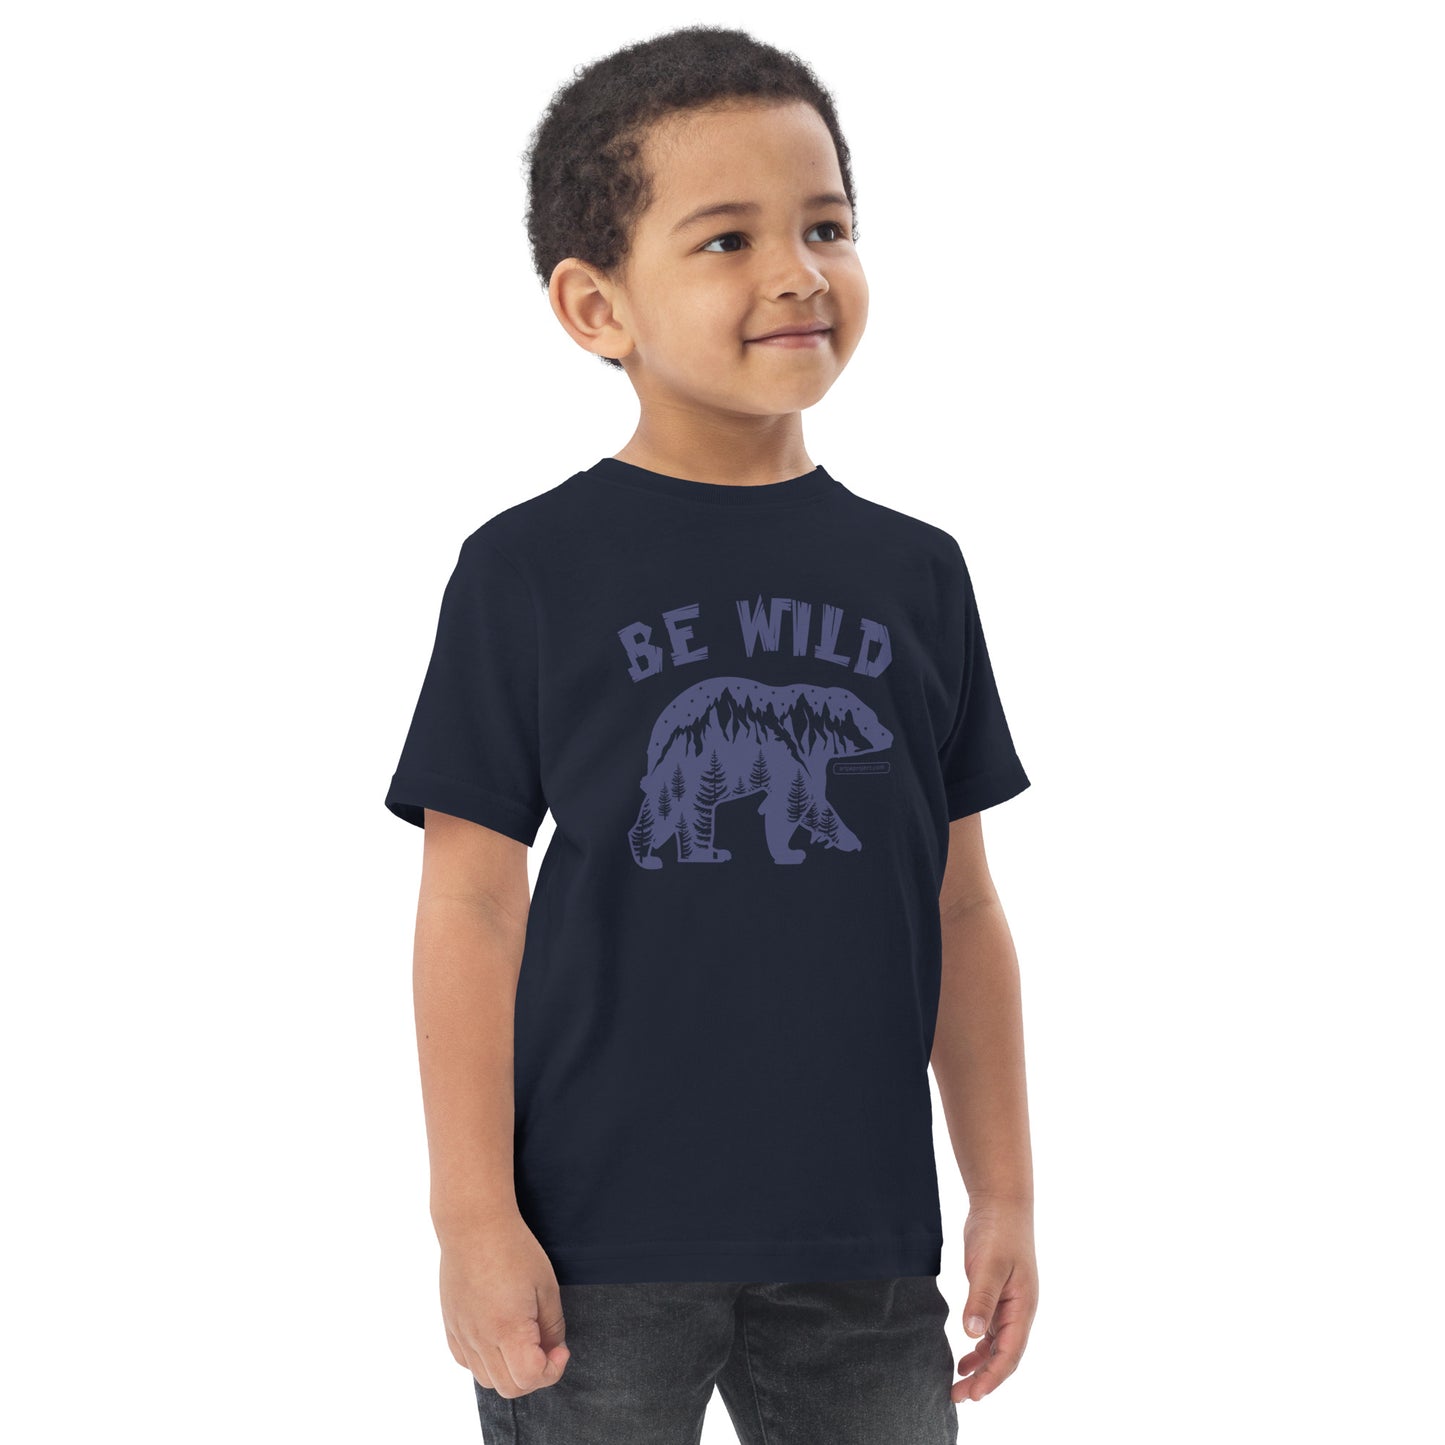 Be Wild - Toddler Jersey T-shirt